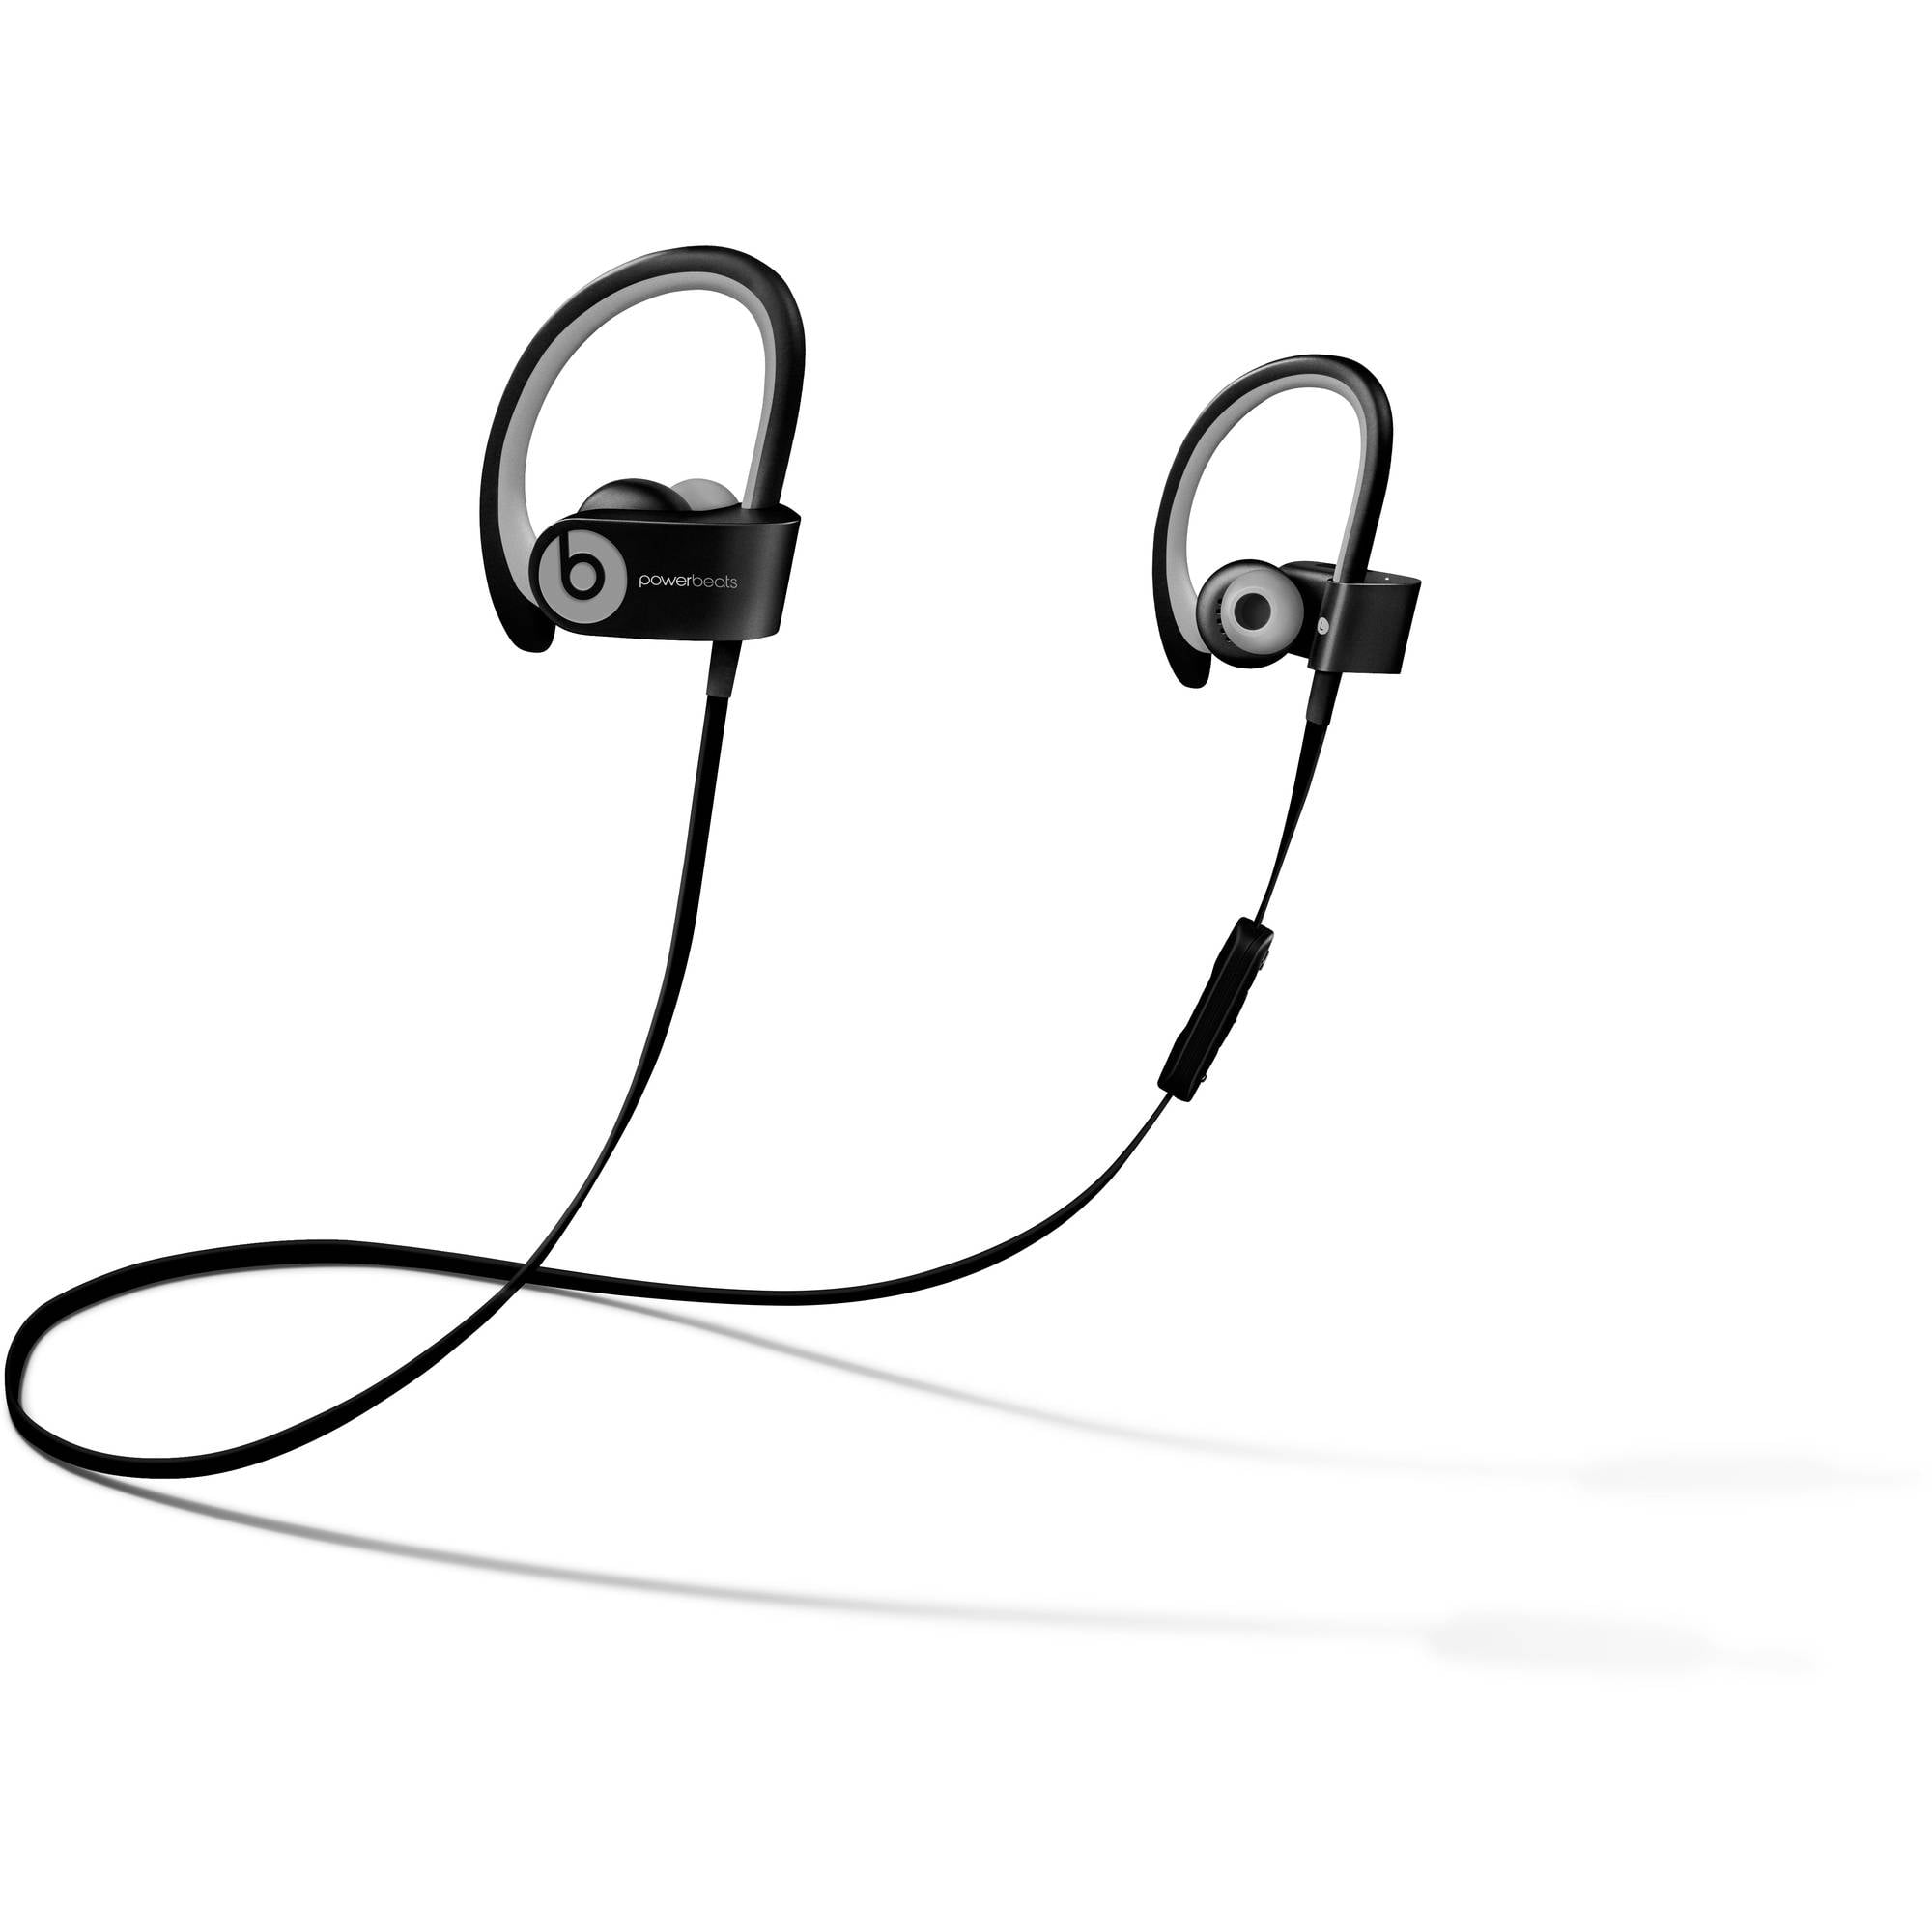 powerbeats2 wireless earphones